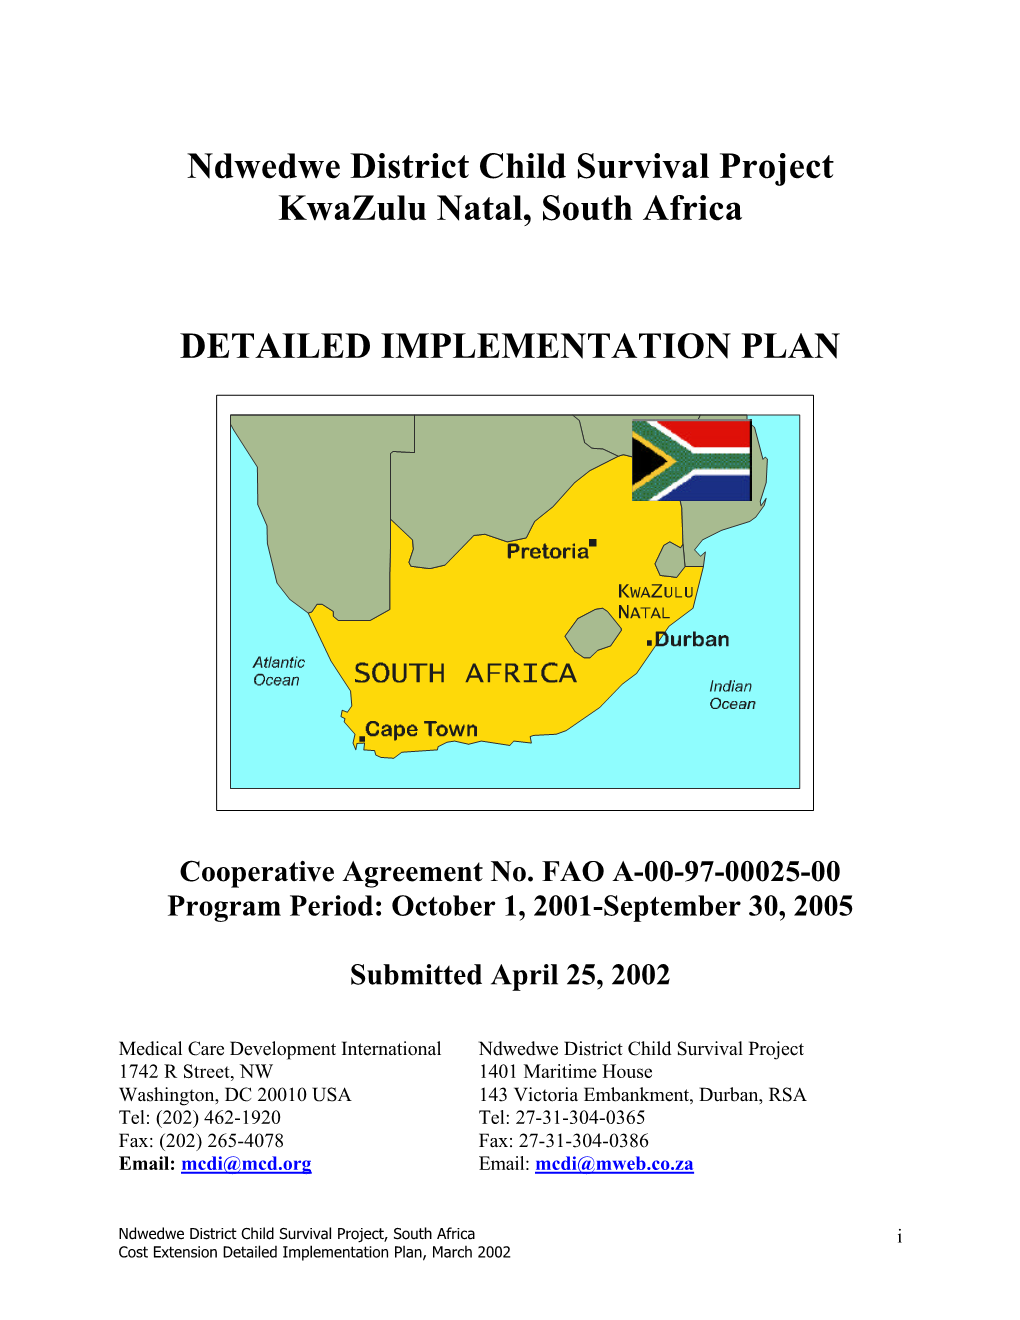 Ndwedwe District Child Survival Project Kwazulu Natal, South Africa